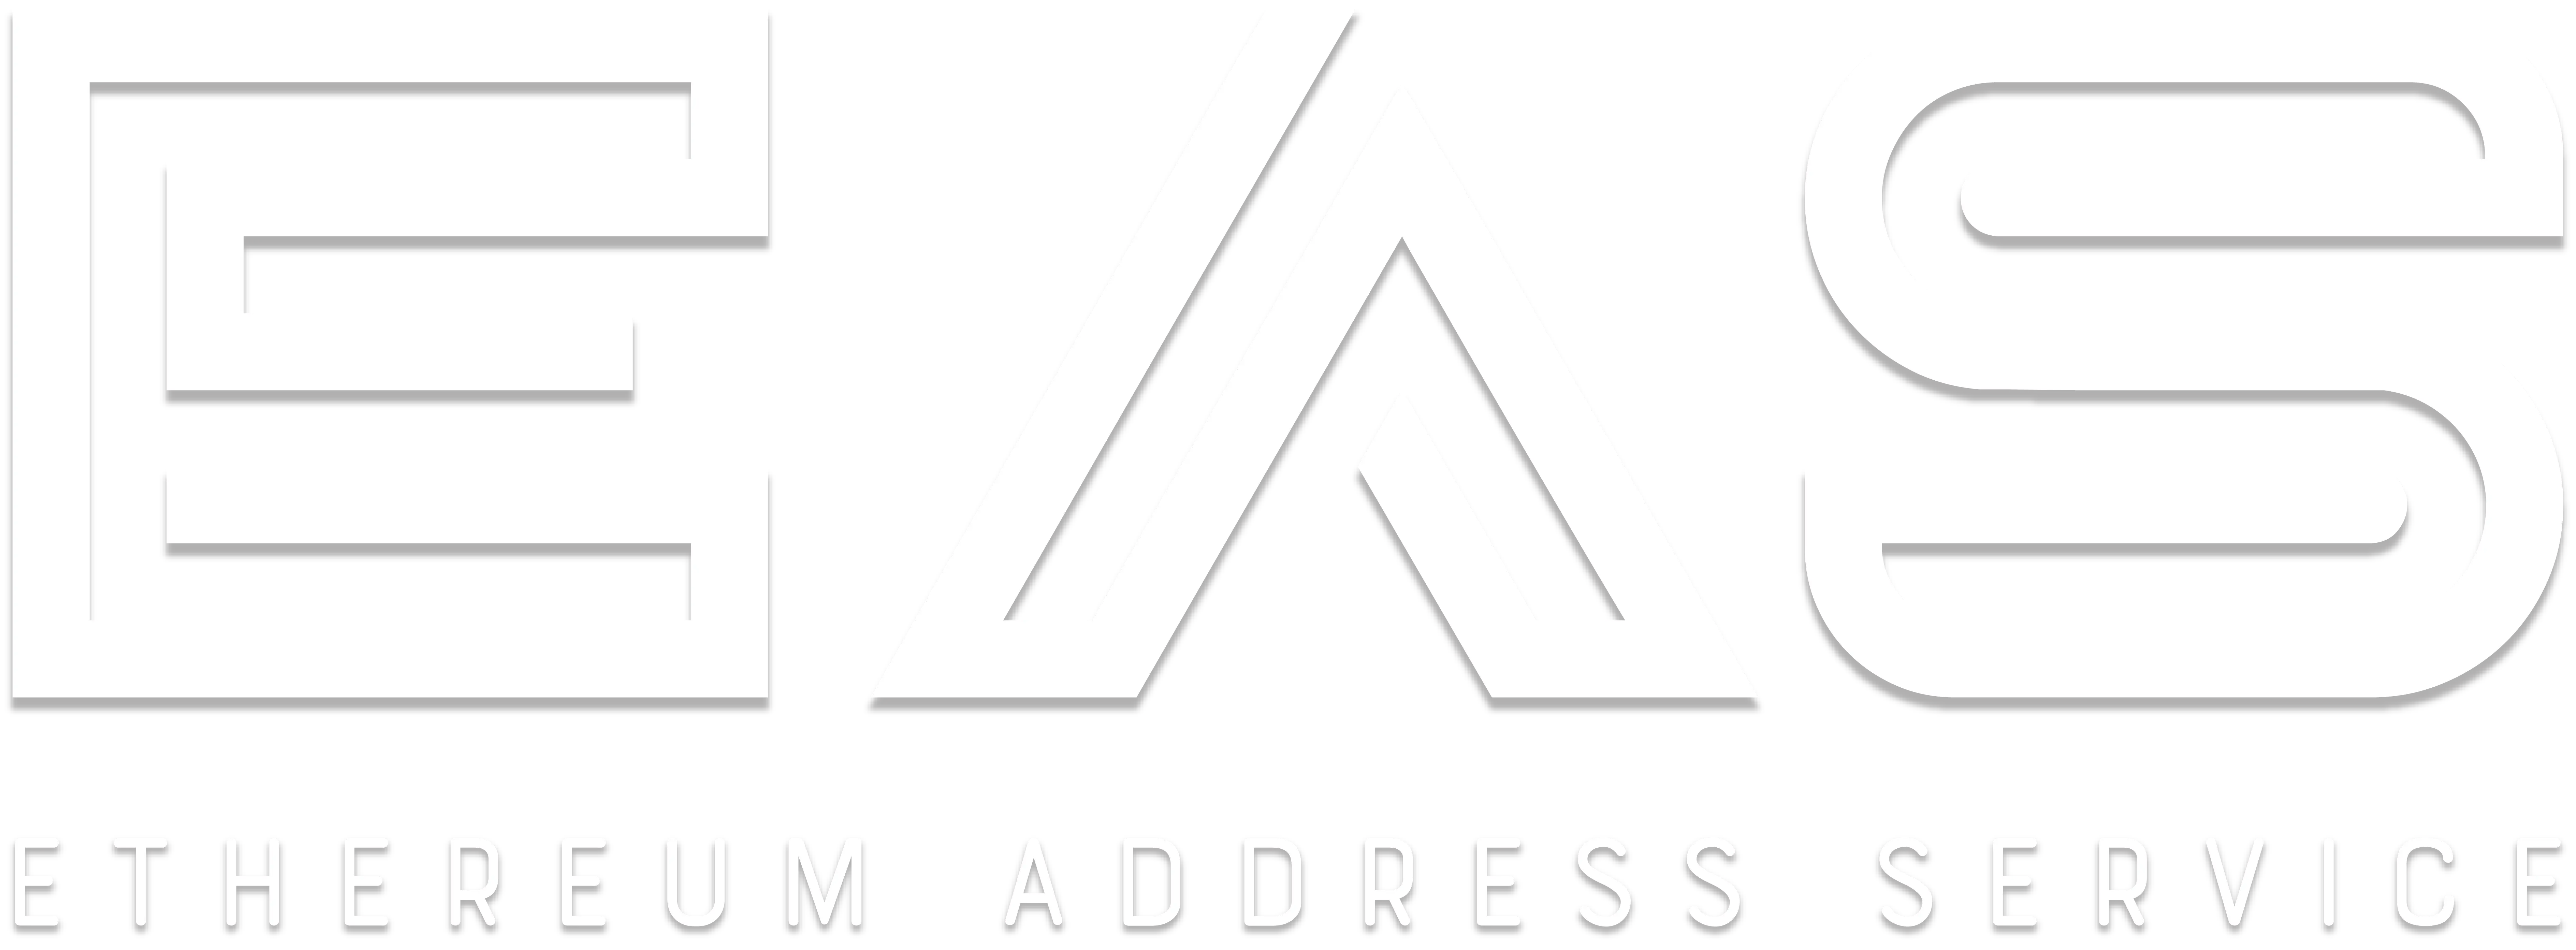 Ethereum Address Service (EAS) Logo